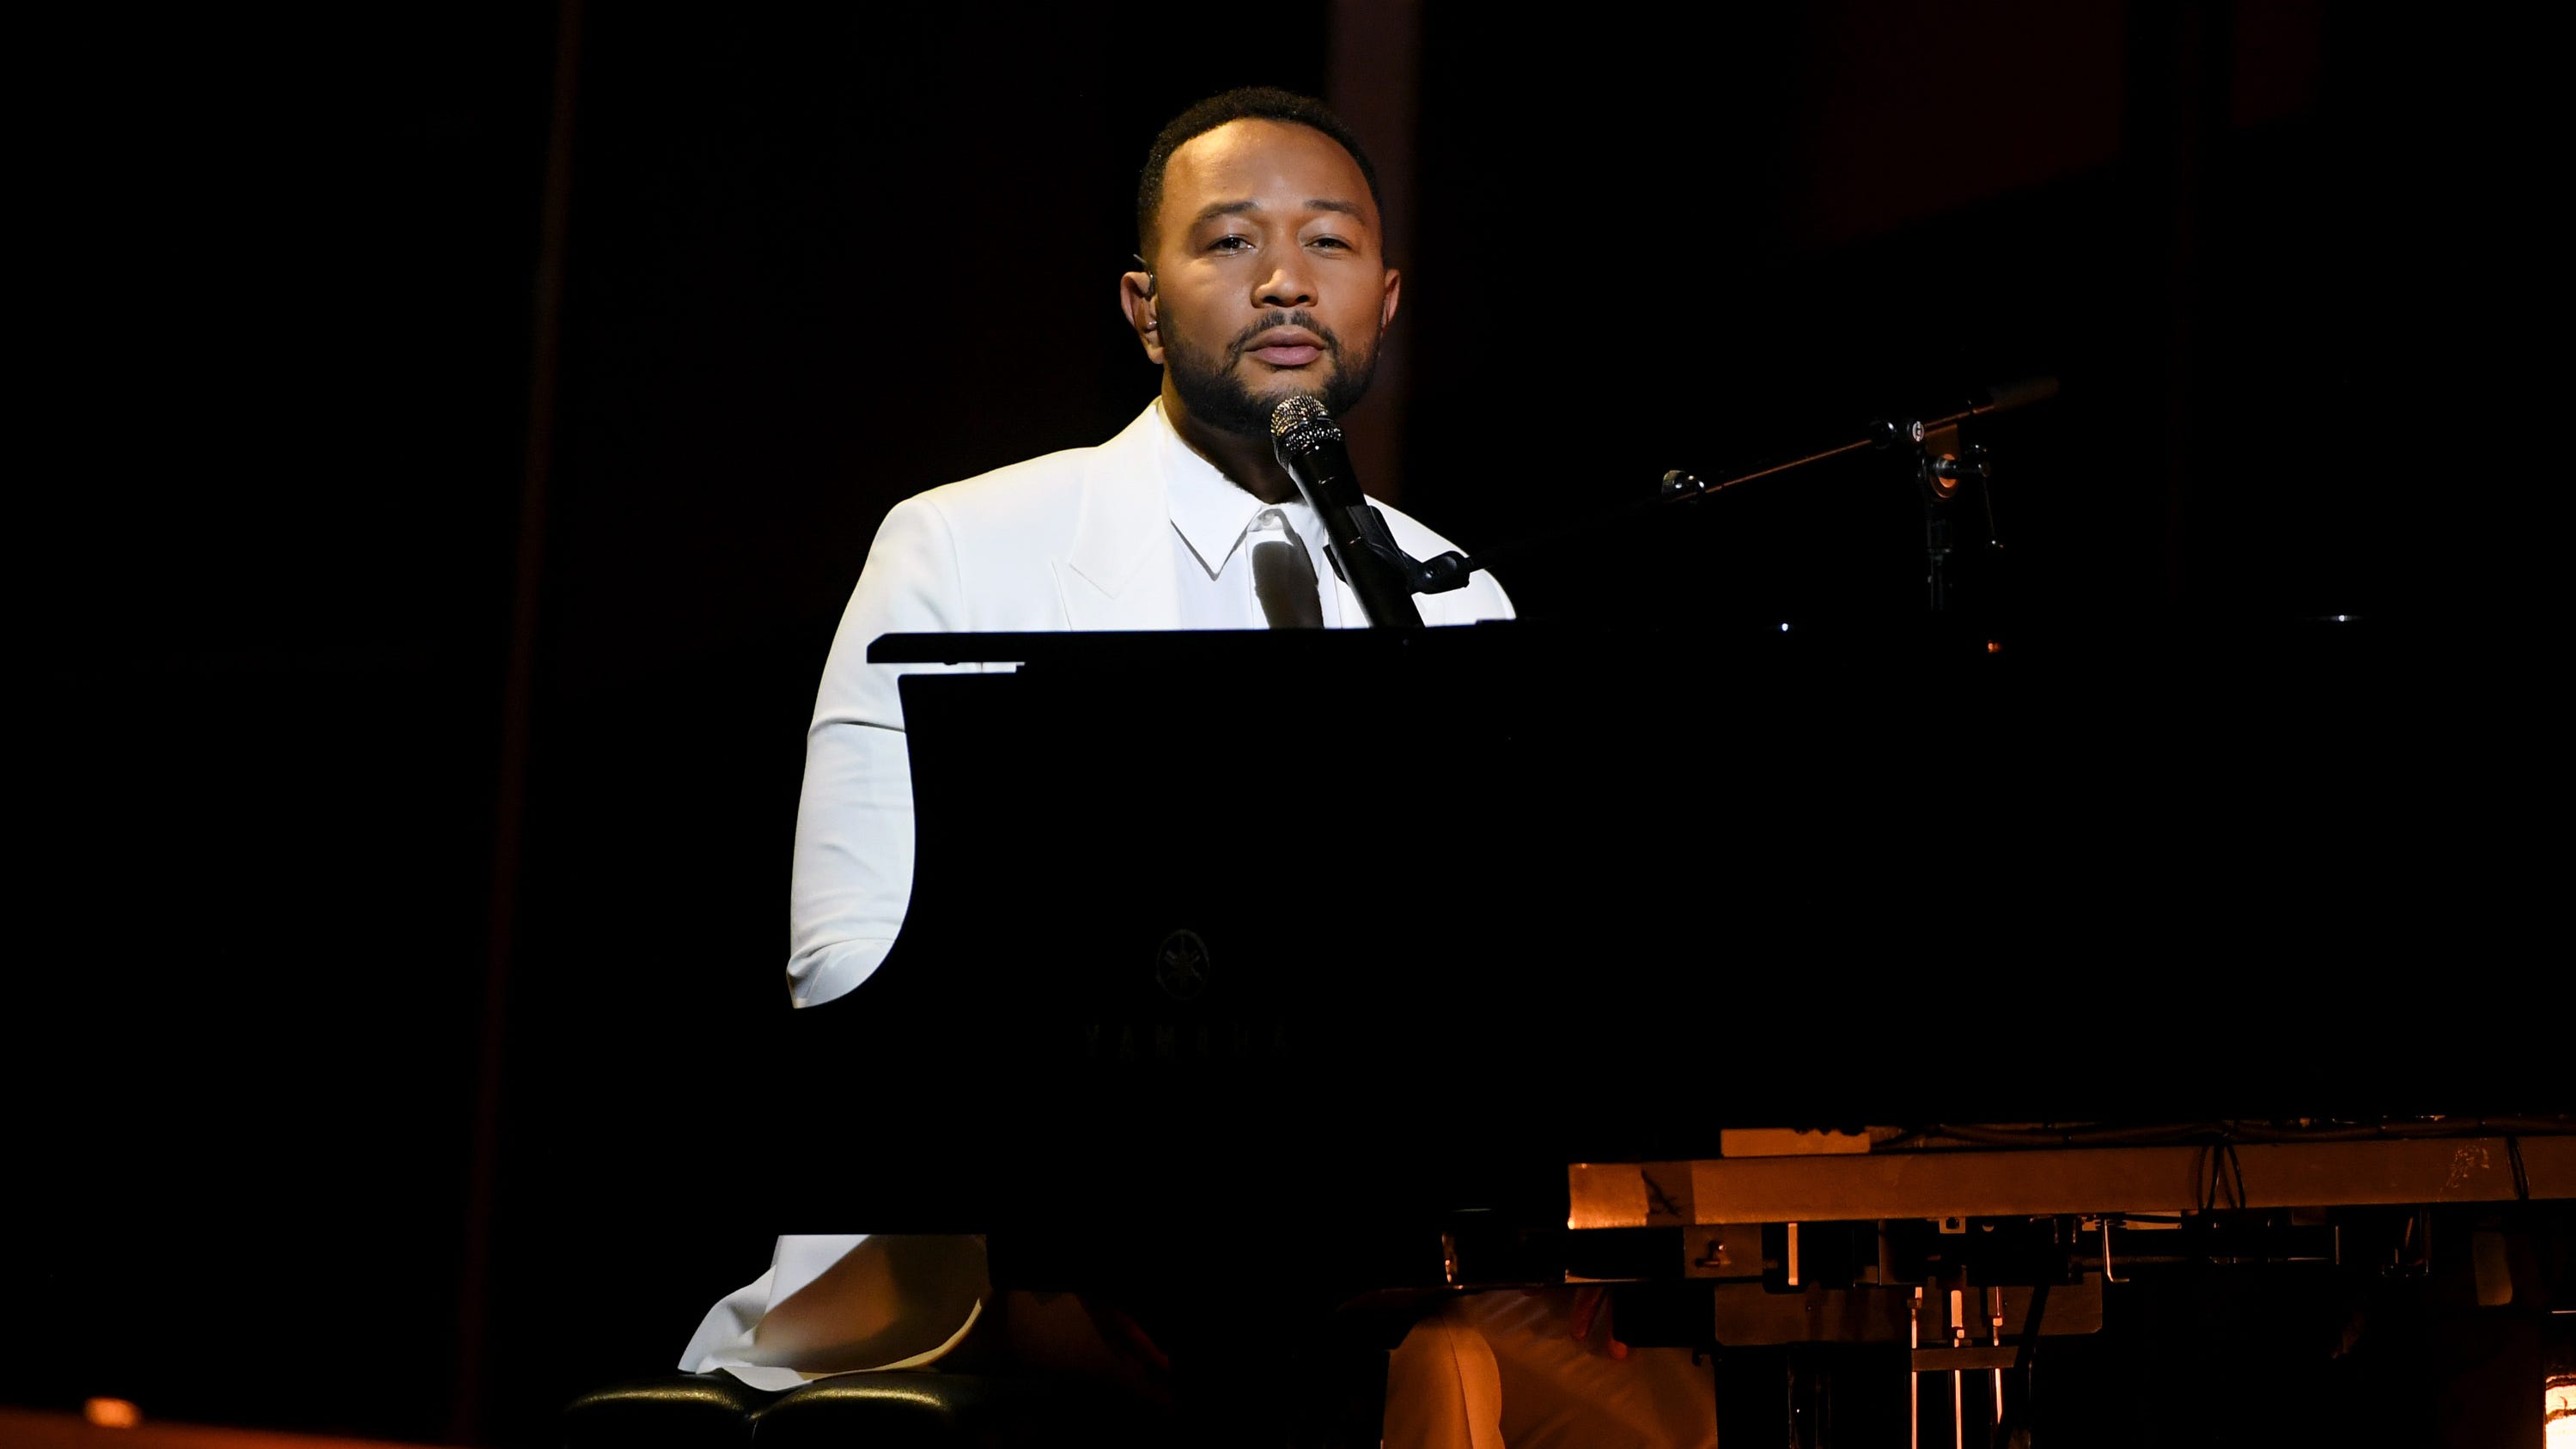 John Legend dedicates emotional Billboard Music Awards performance to Chrissy Teigen after pregnancy loss - USA TODAY